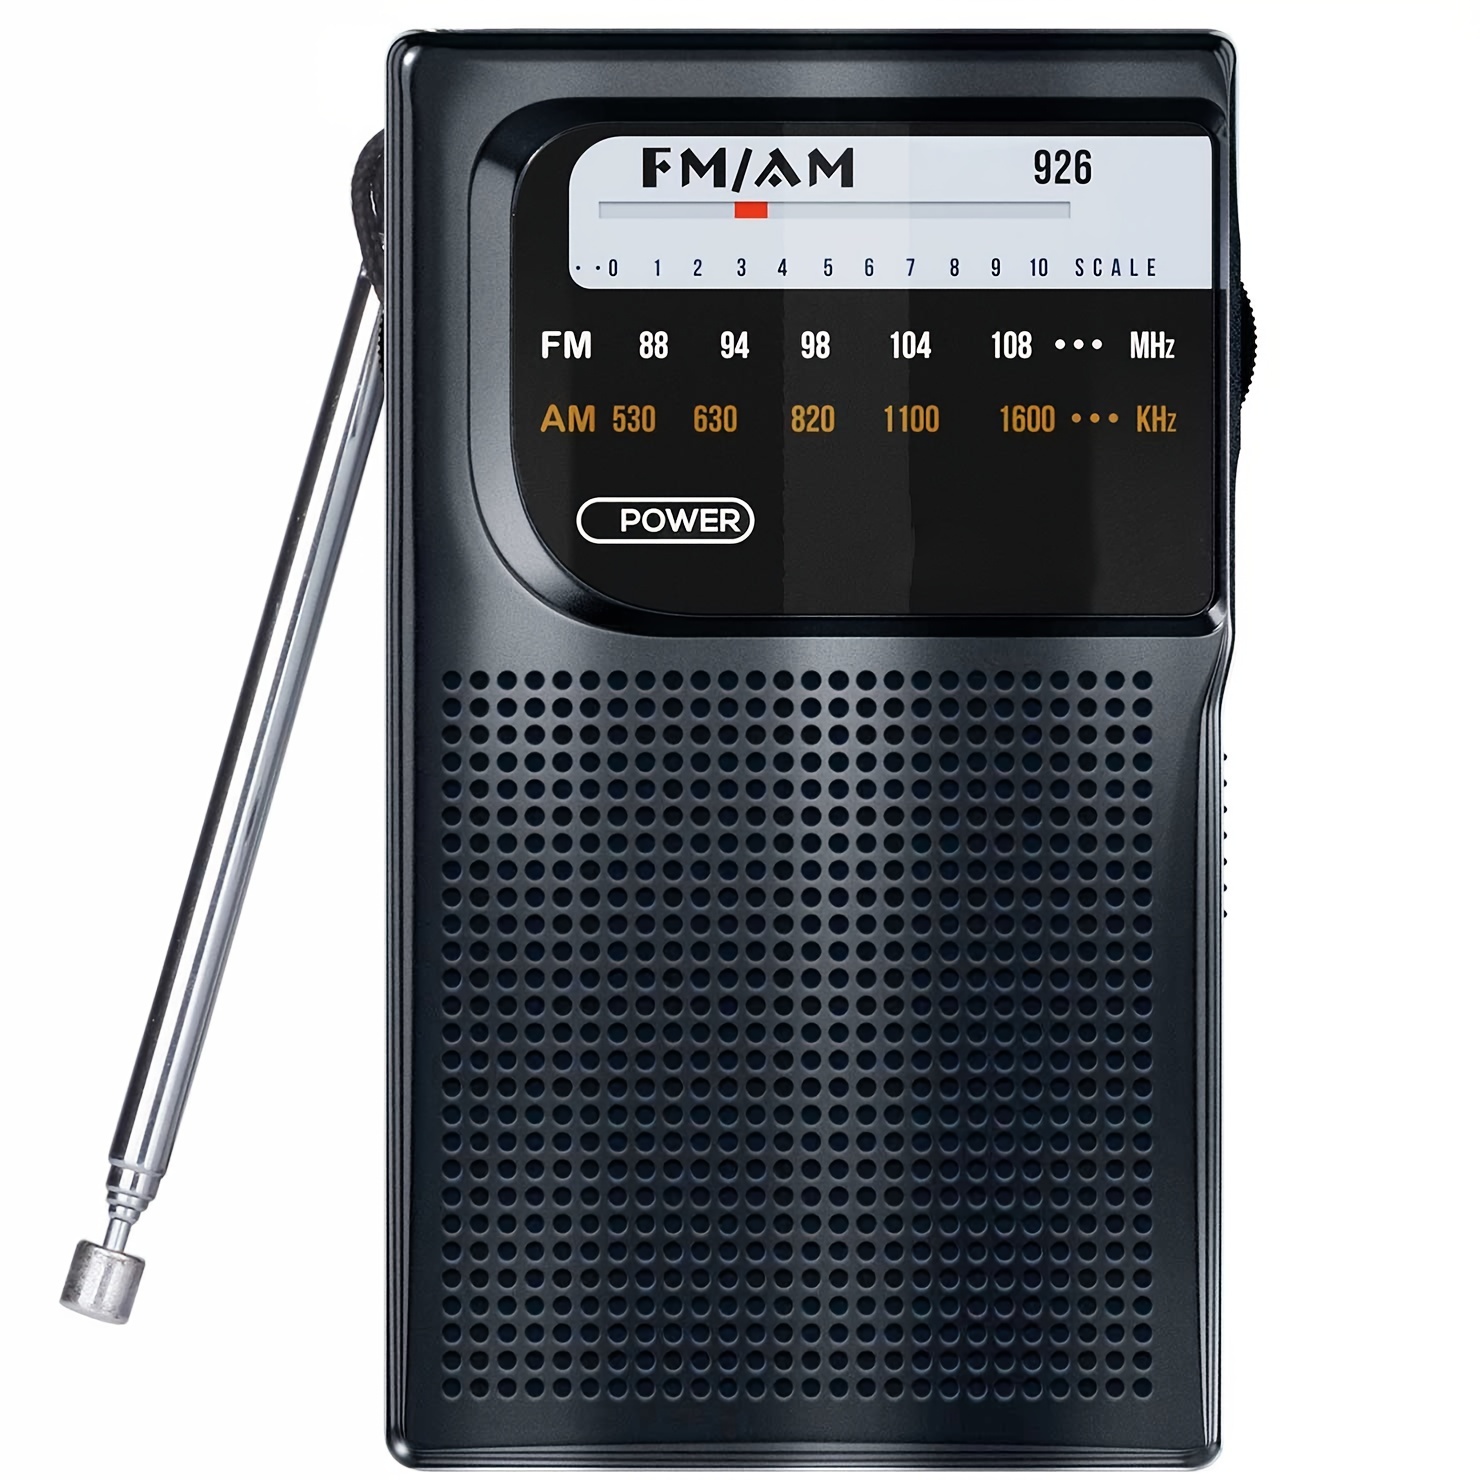 Las 8 mejores Mini radios portátiles de bolsillo